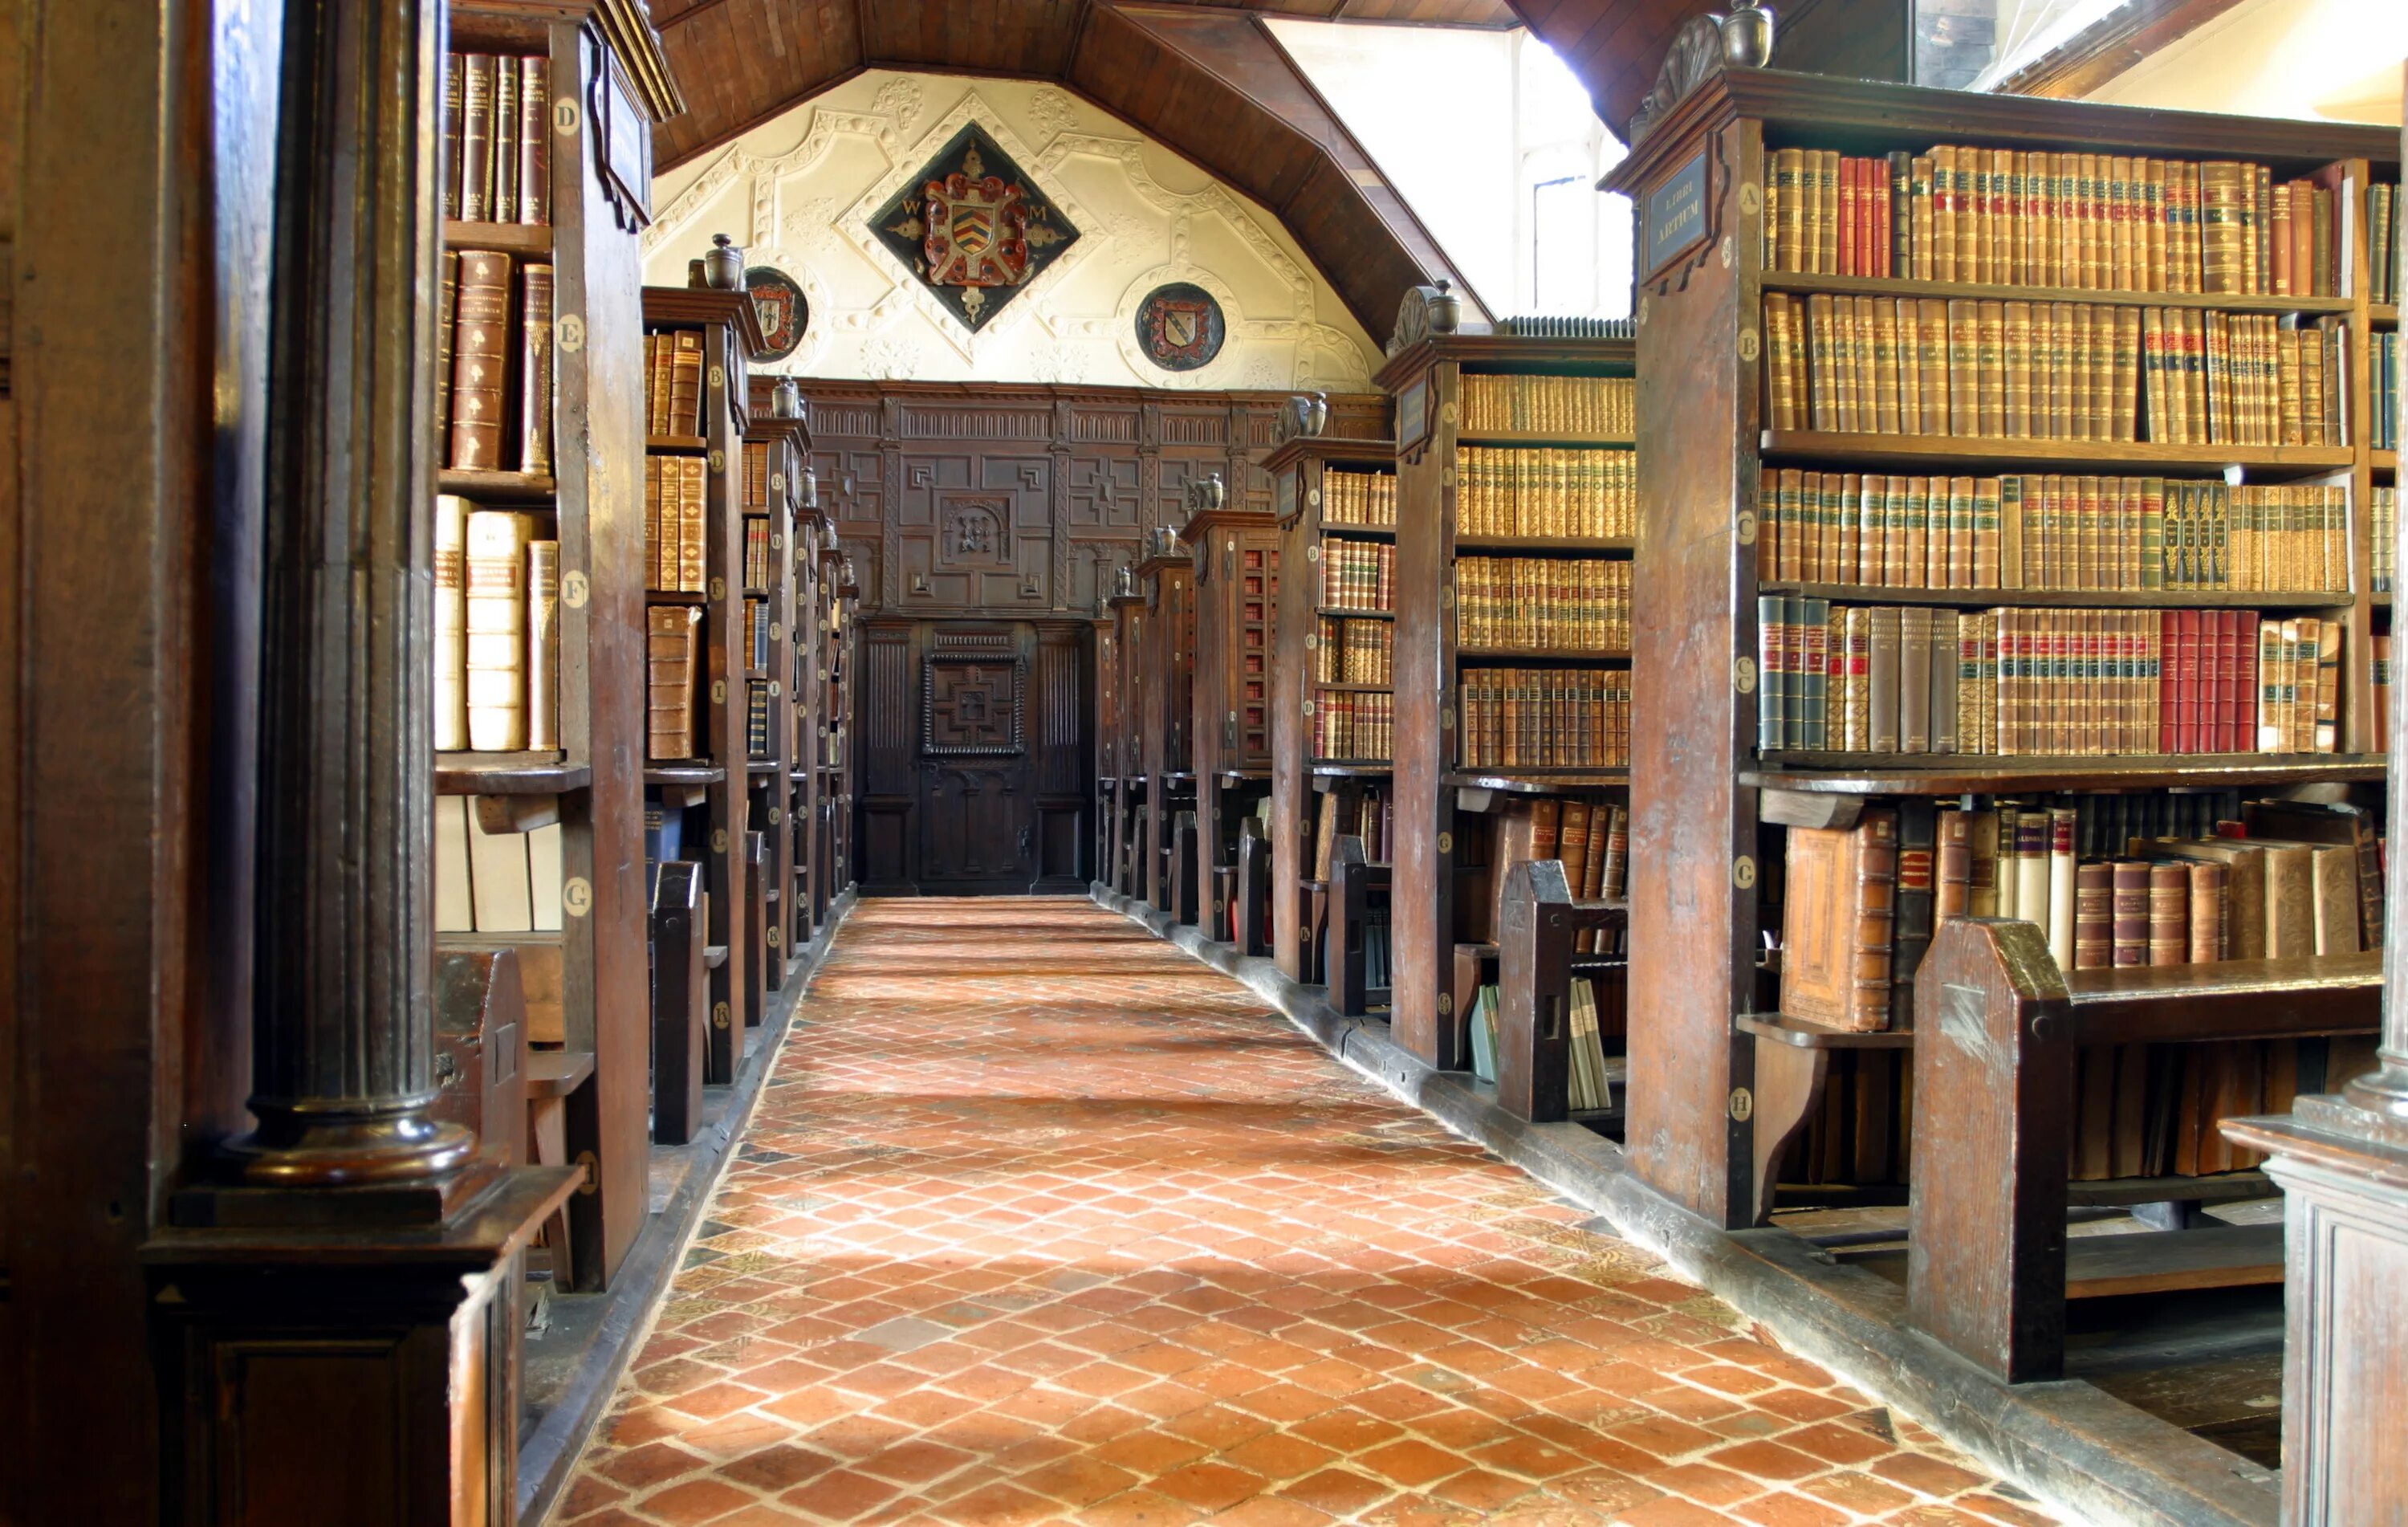 Библиотека 7 букв. Мертон-колледж (Оксфорд). Библиотека Тринити-колледжа, Дублин, Ирландия. Библиотека Тринити-колледжа в Дублине. Оксфордский университет библиотека.